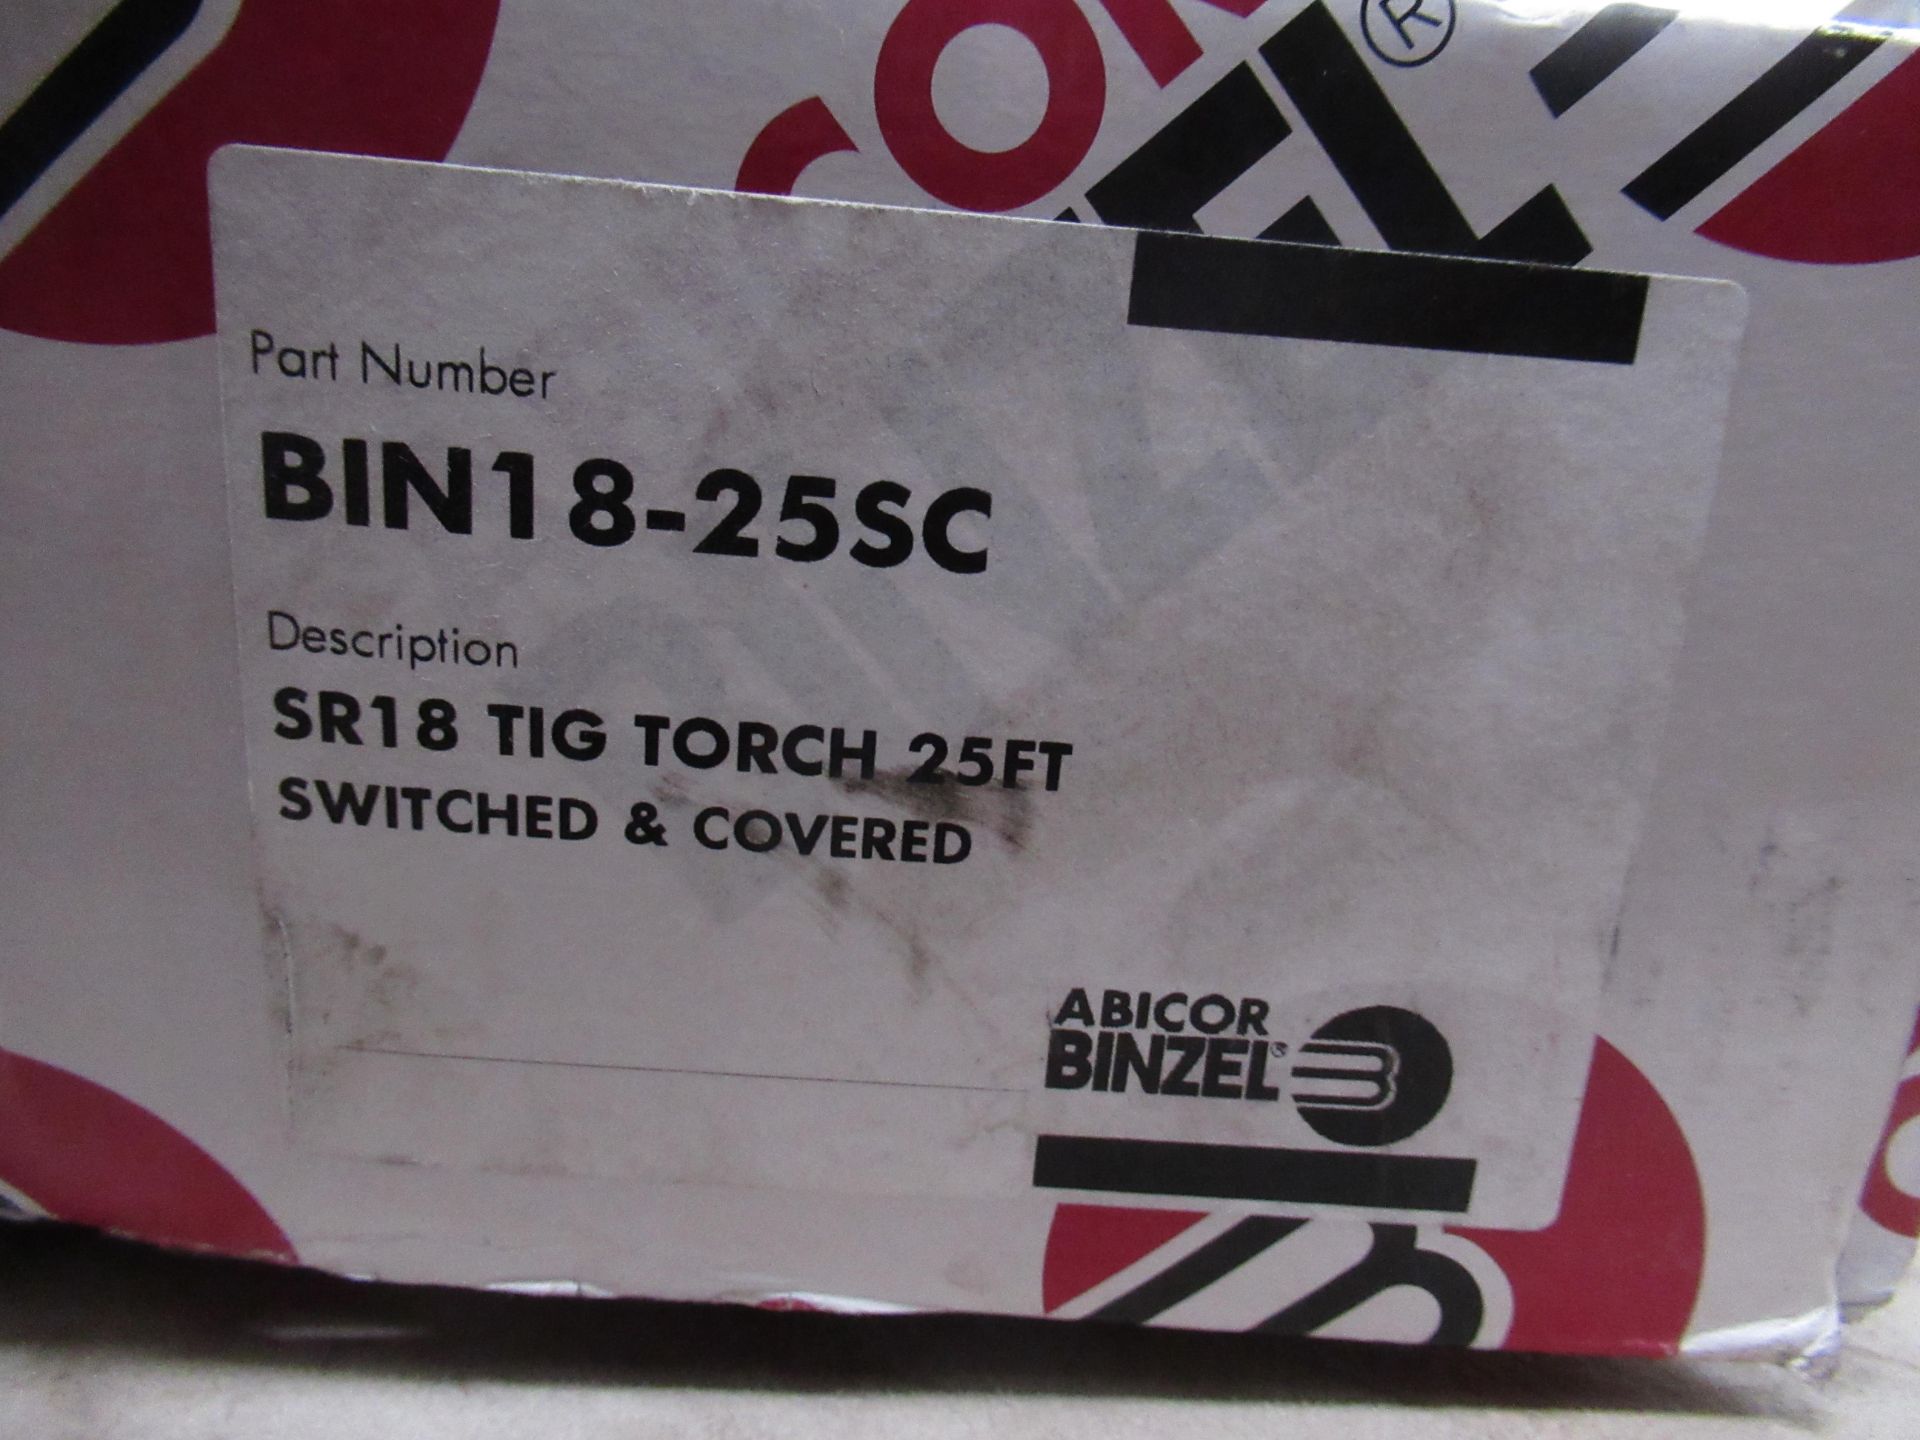 1 new Abicor Binzel SR18 Tig torch 25FT - Image 2 of 2